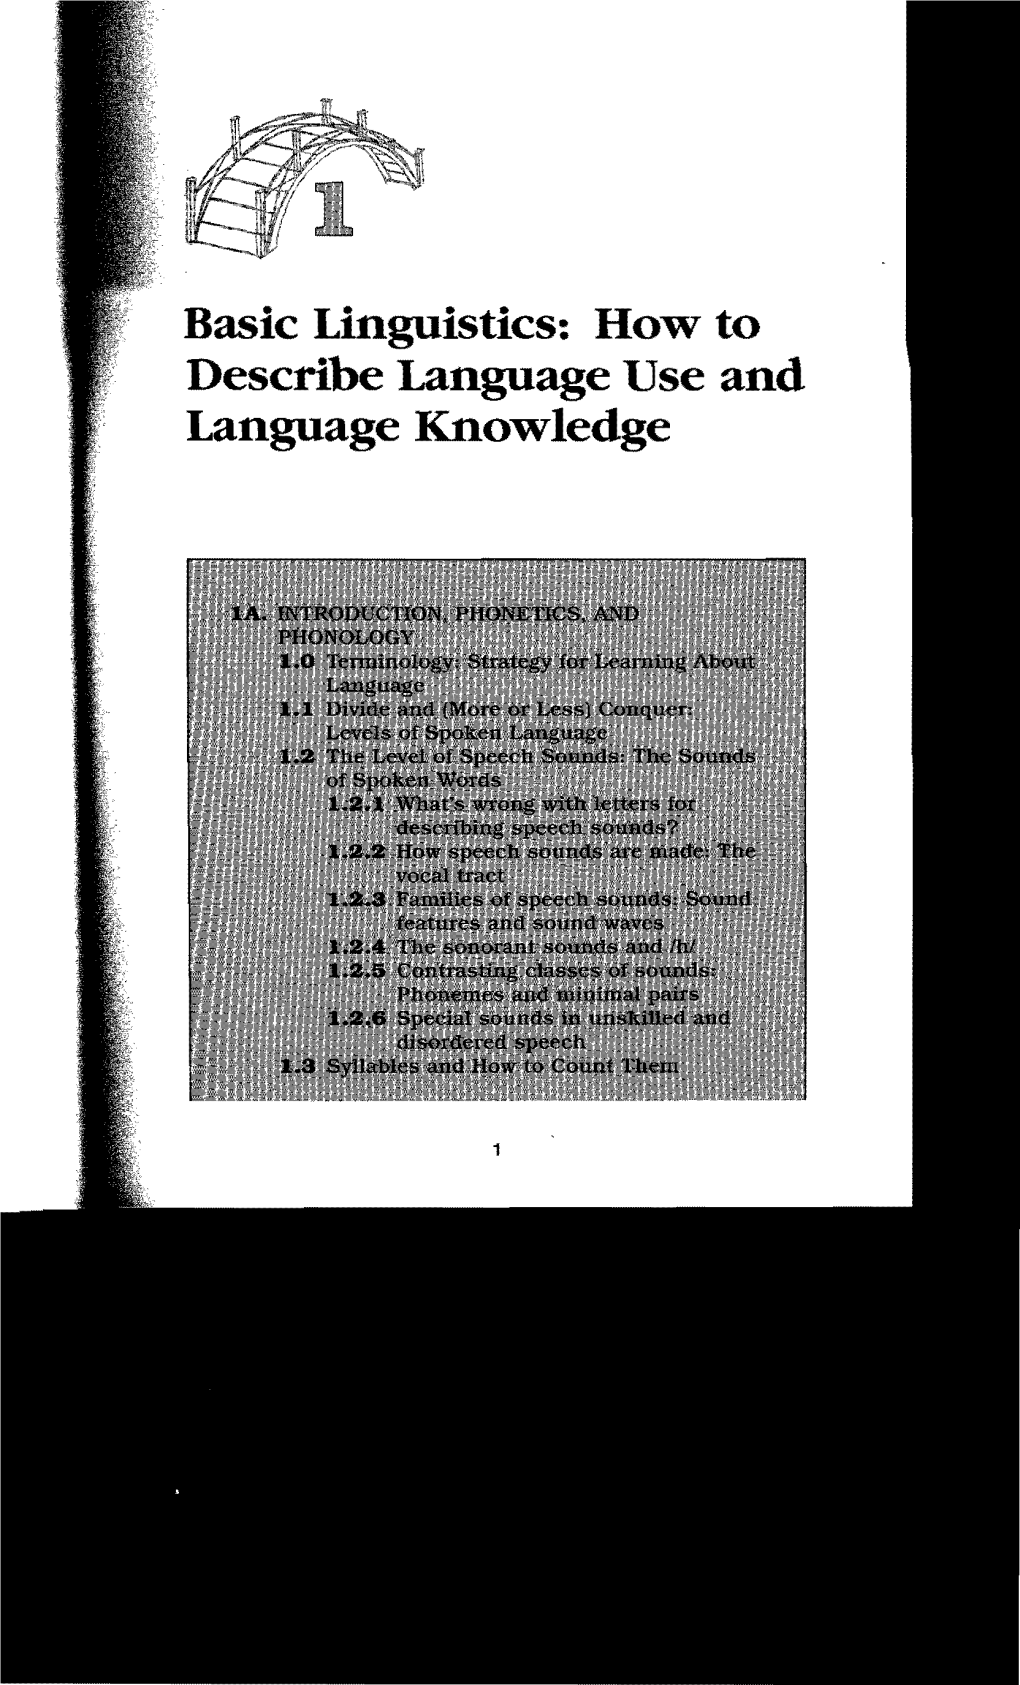 Basic Linguistics: How to Describe Language Use and Language Knowledge 2 PSYCHOLINGUISTICS: INTRODUCTION and APPLICATIONS BASIC LINGUISTICS 3